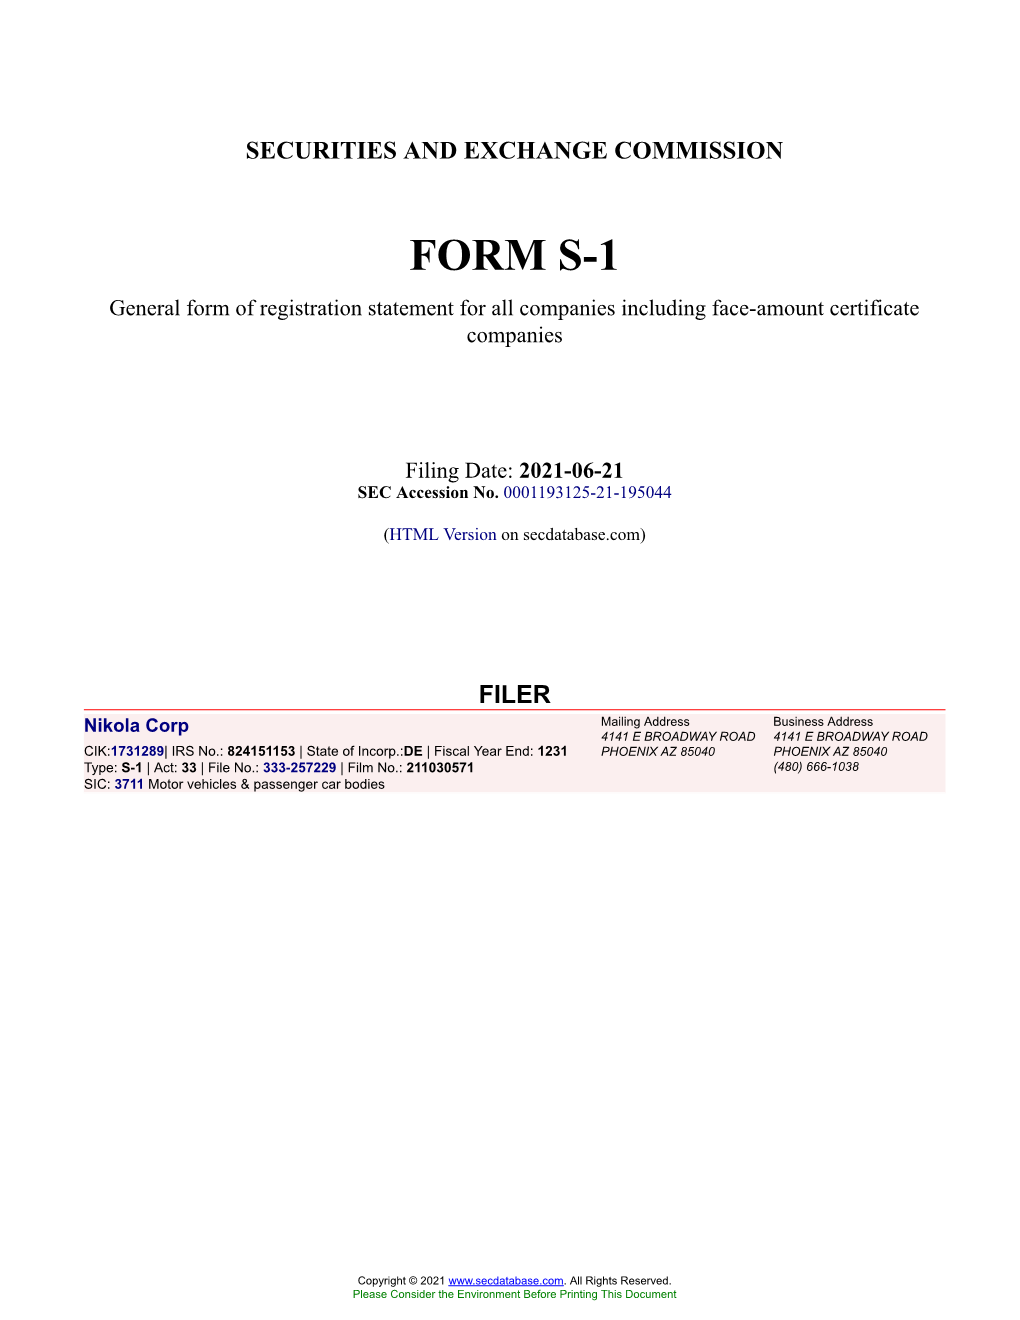 Nikola Corp Form S-1 Filed 2021-06-21